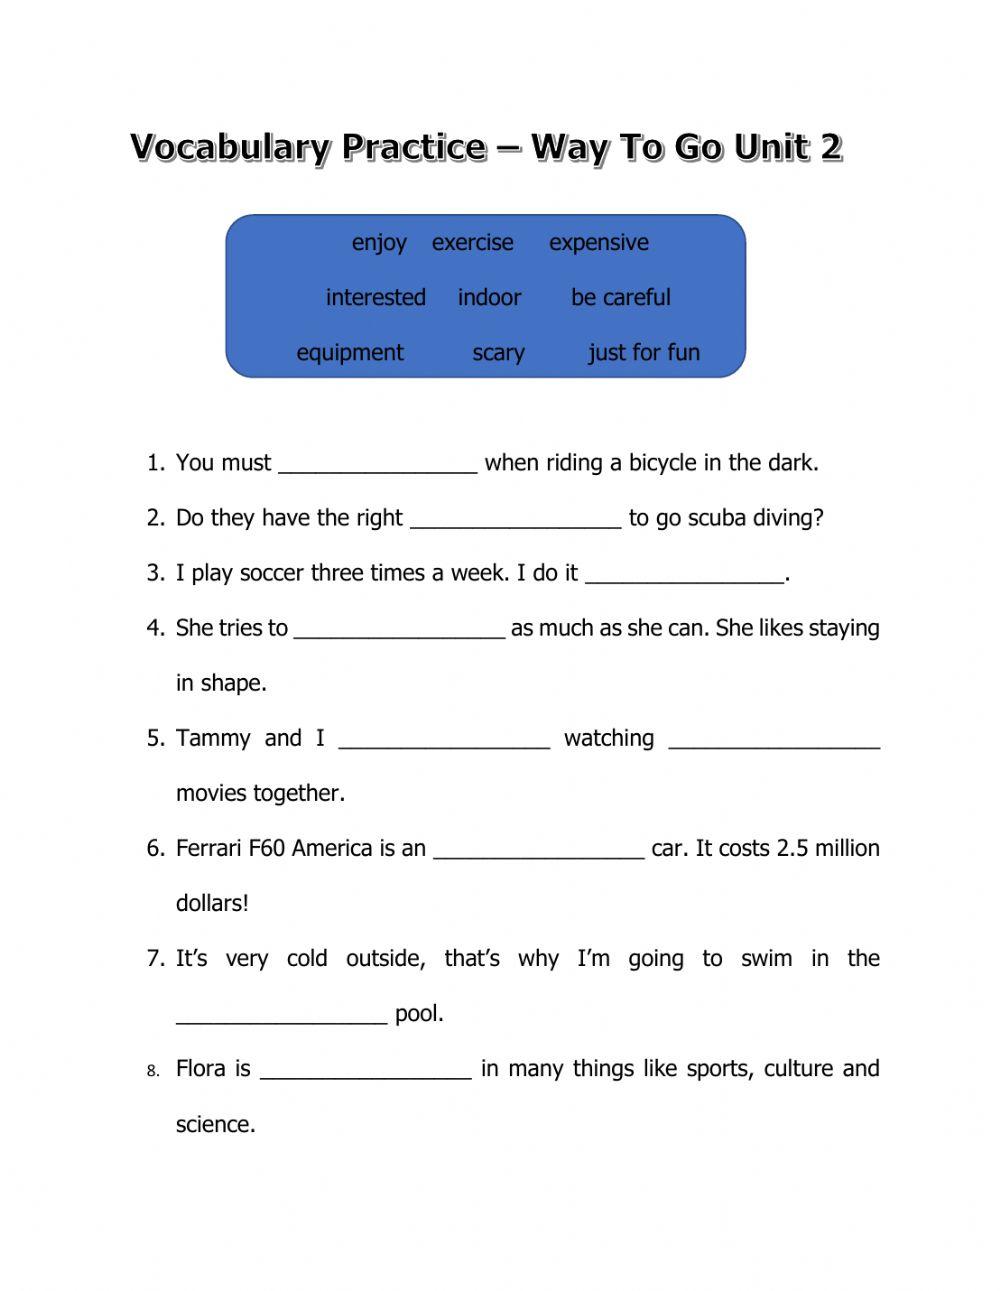 Way To Go Unit 2 - Vocabulary Practice